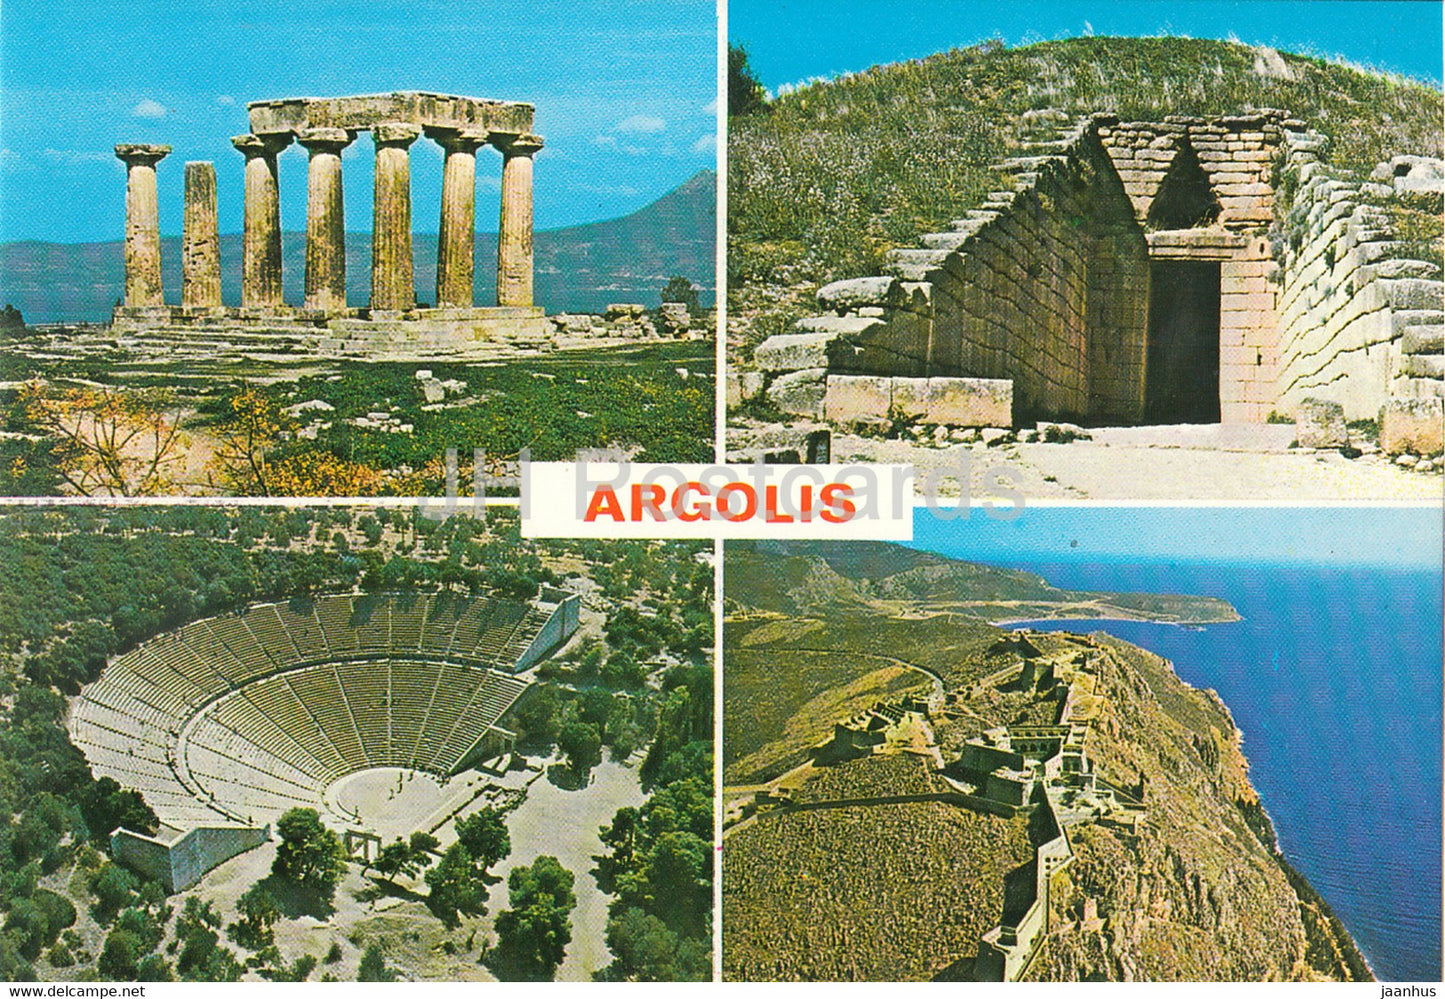 Argolis - multiview - Ancient Greece - Greece - unused - JH Postcards